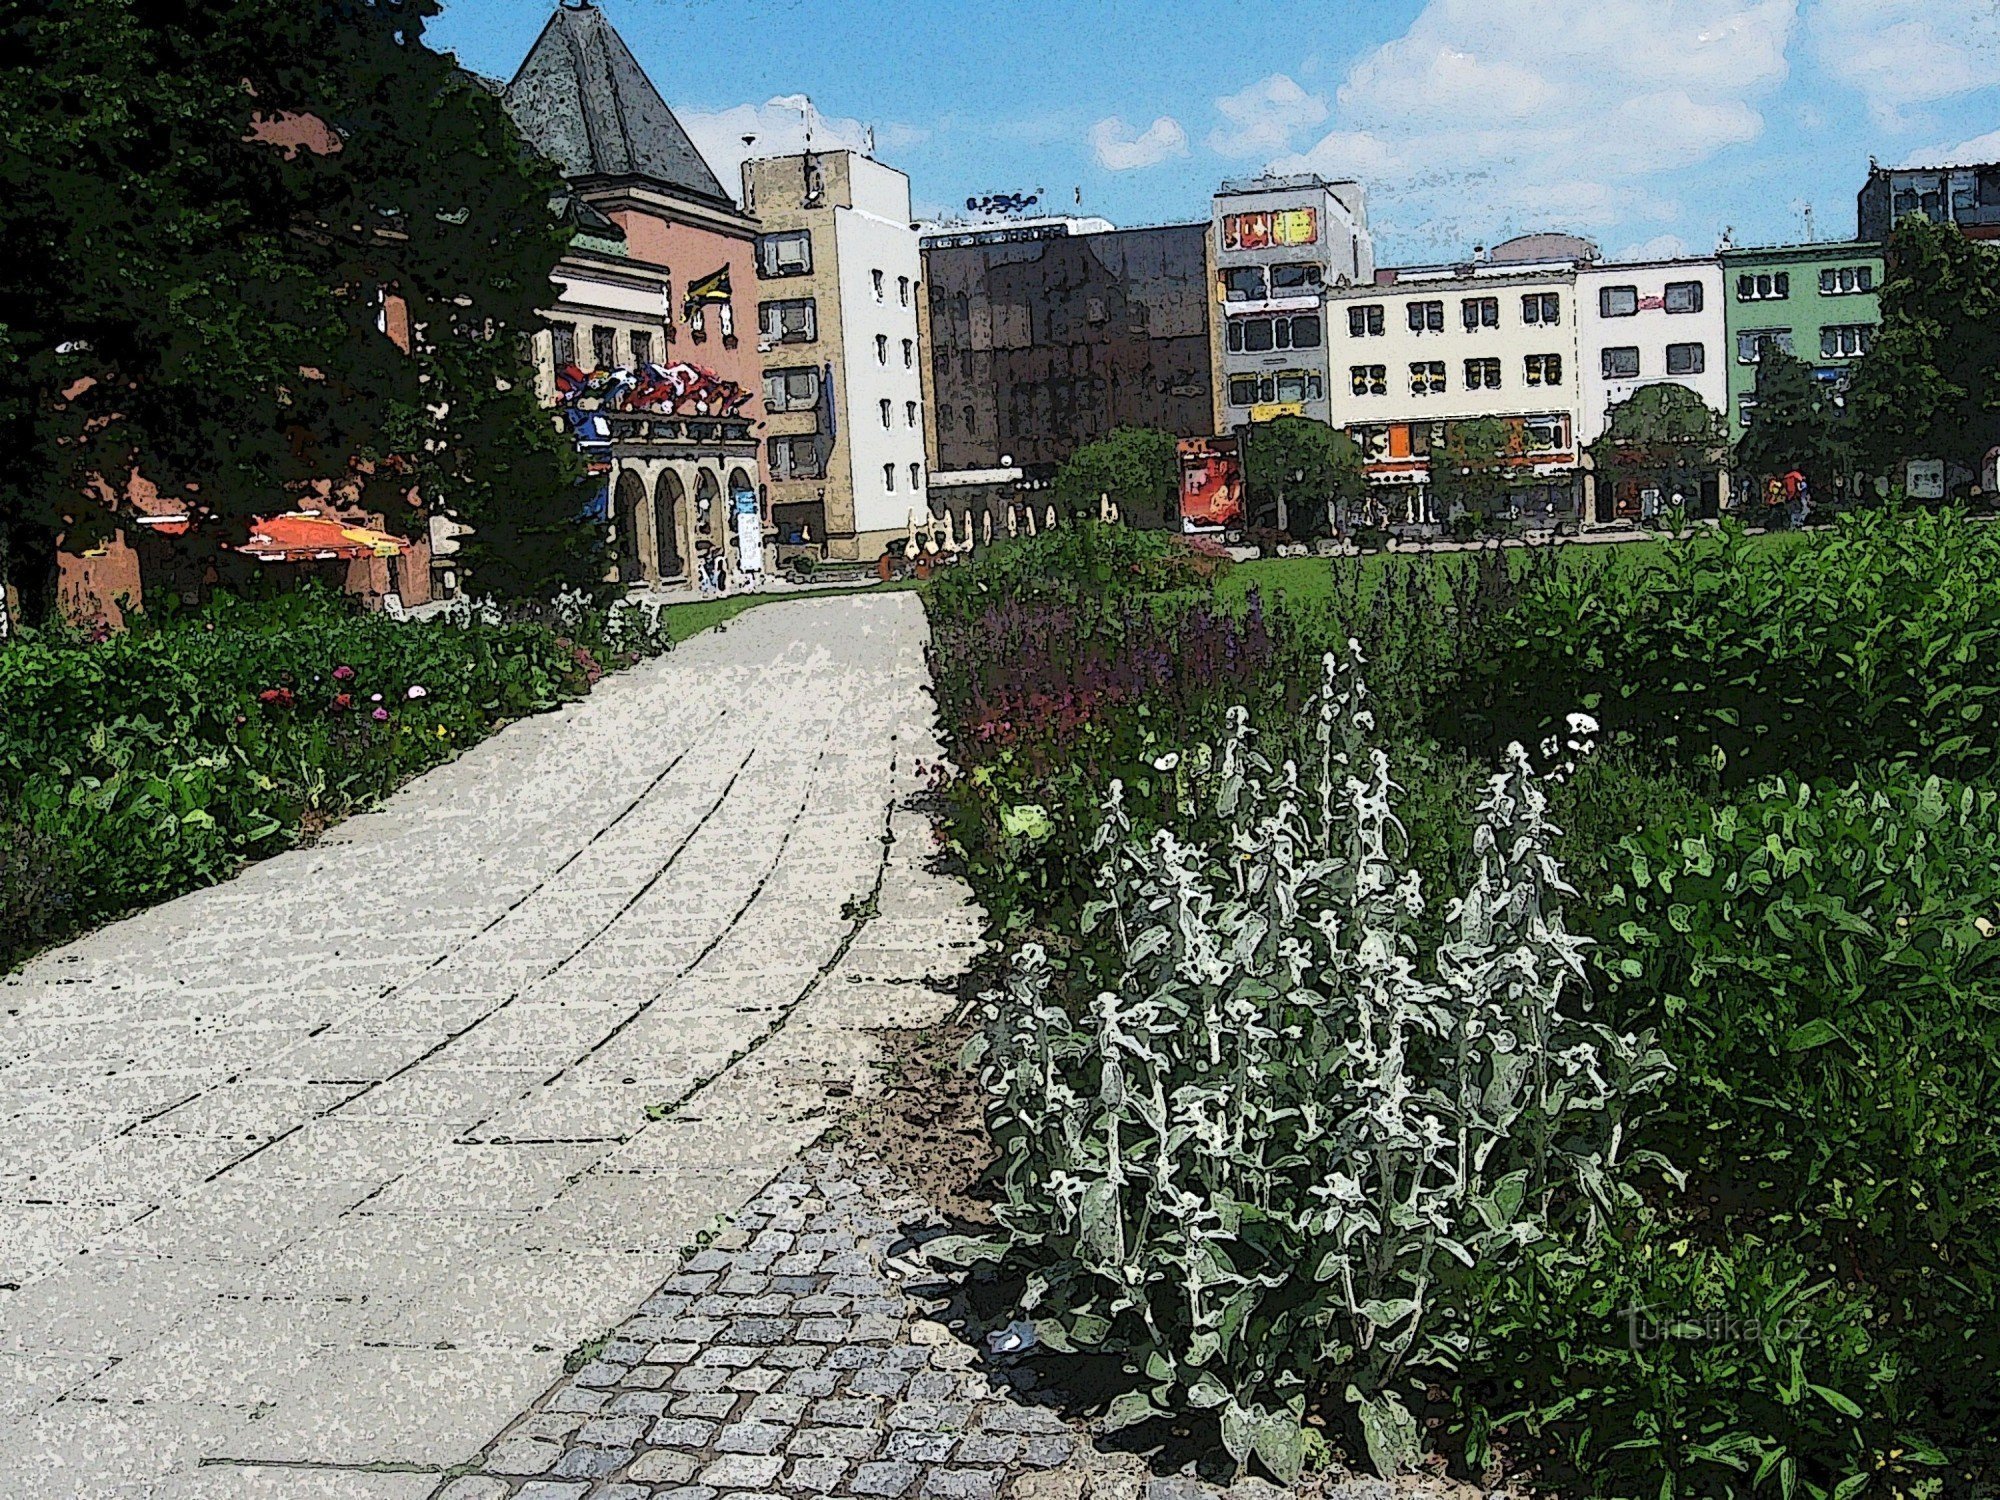 Zlín's main square - Peace Square